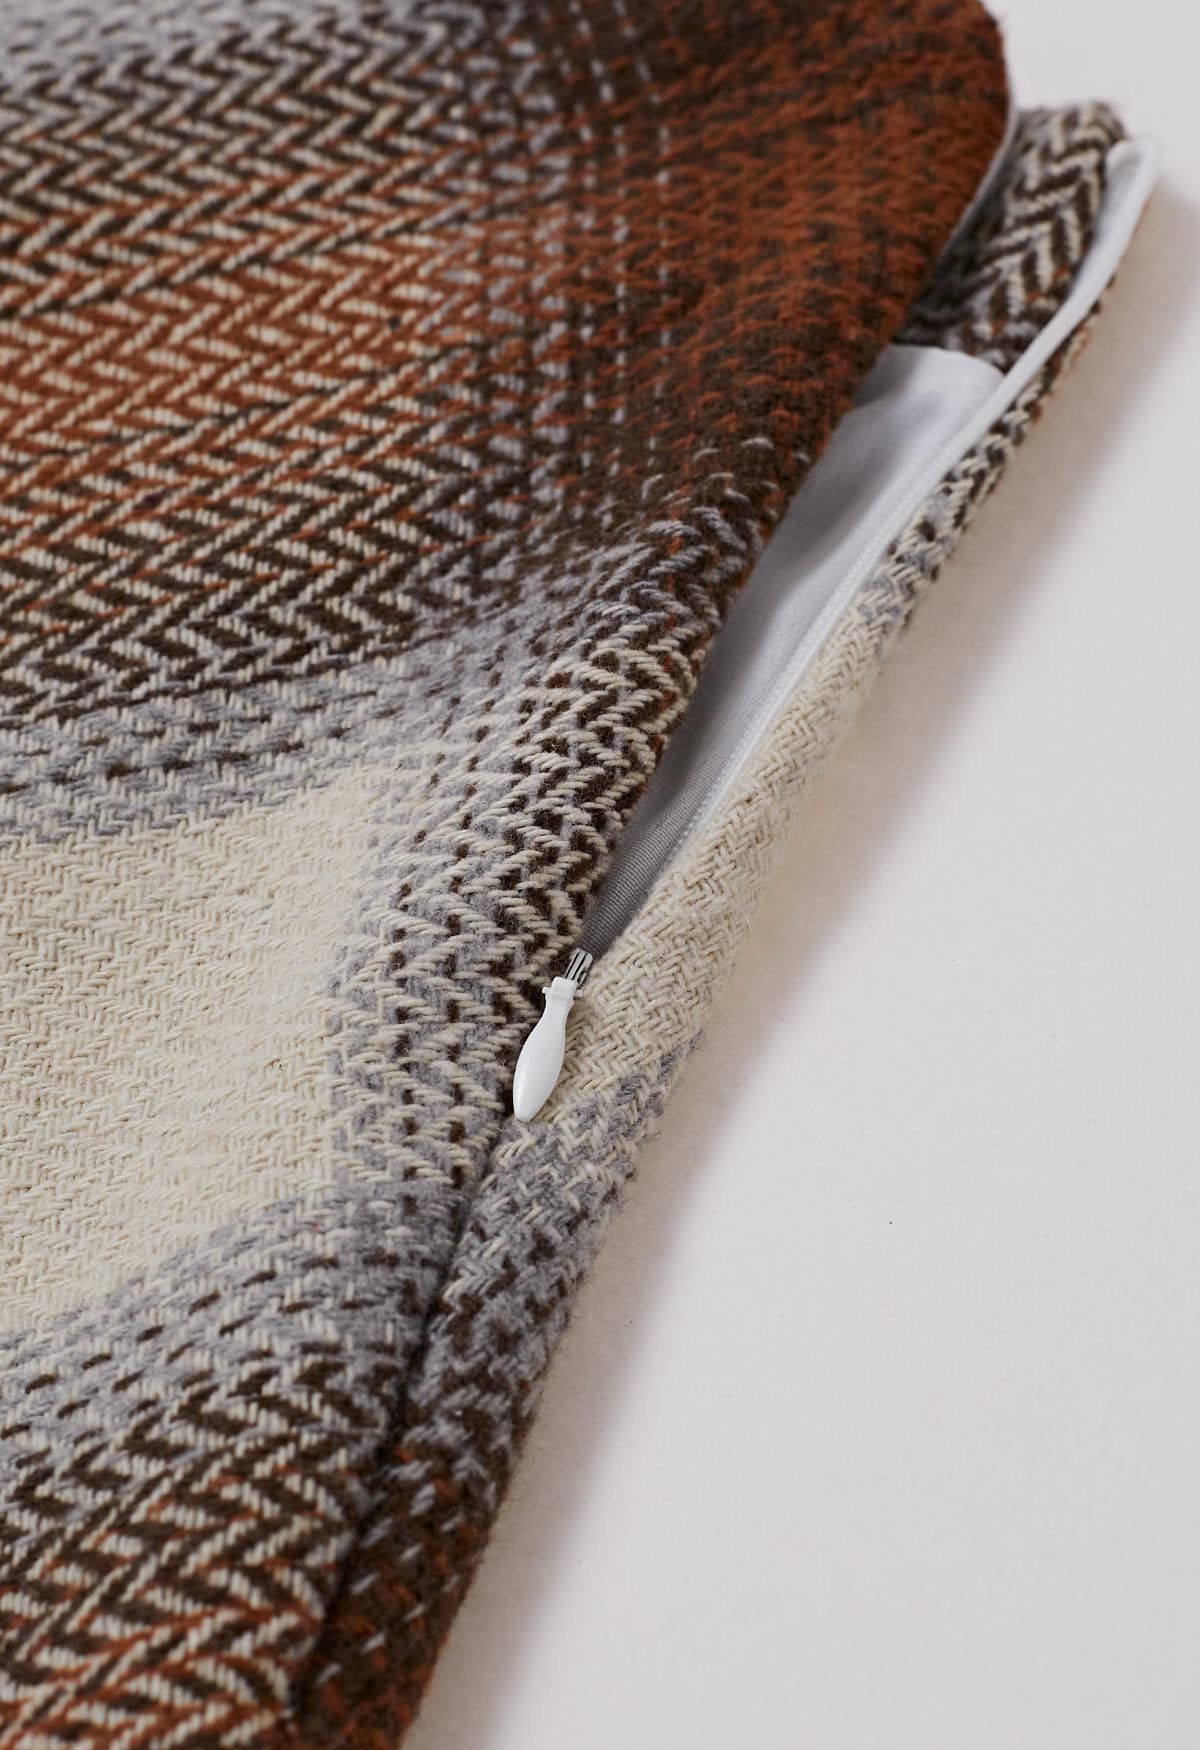 Exquisite Plaid Pattern Wool-Blend Mini Skirt